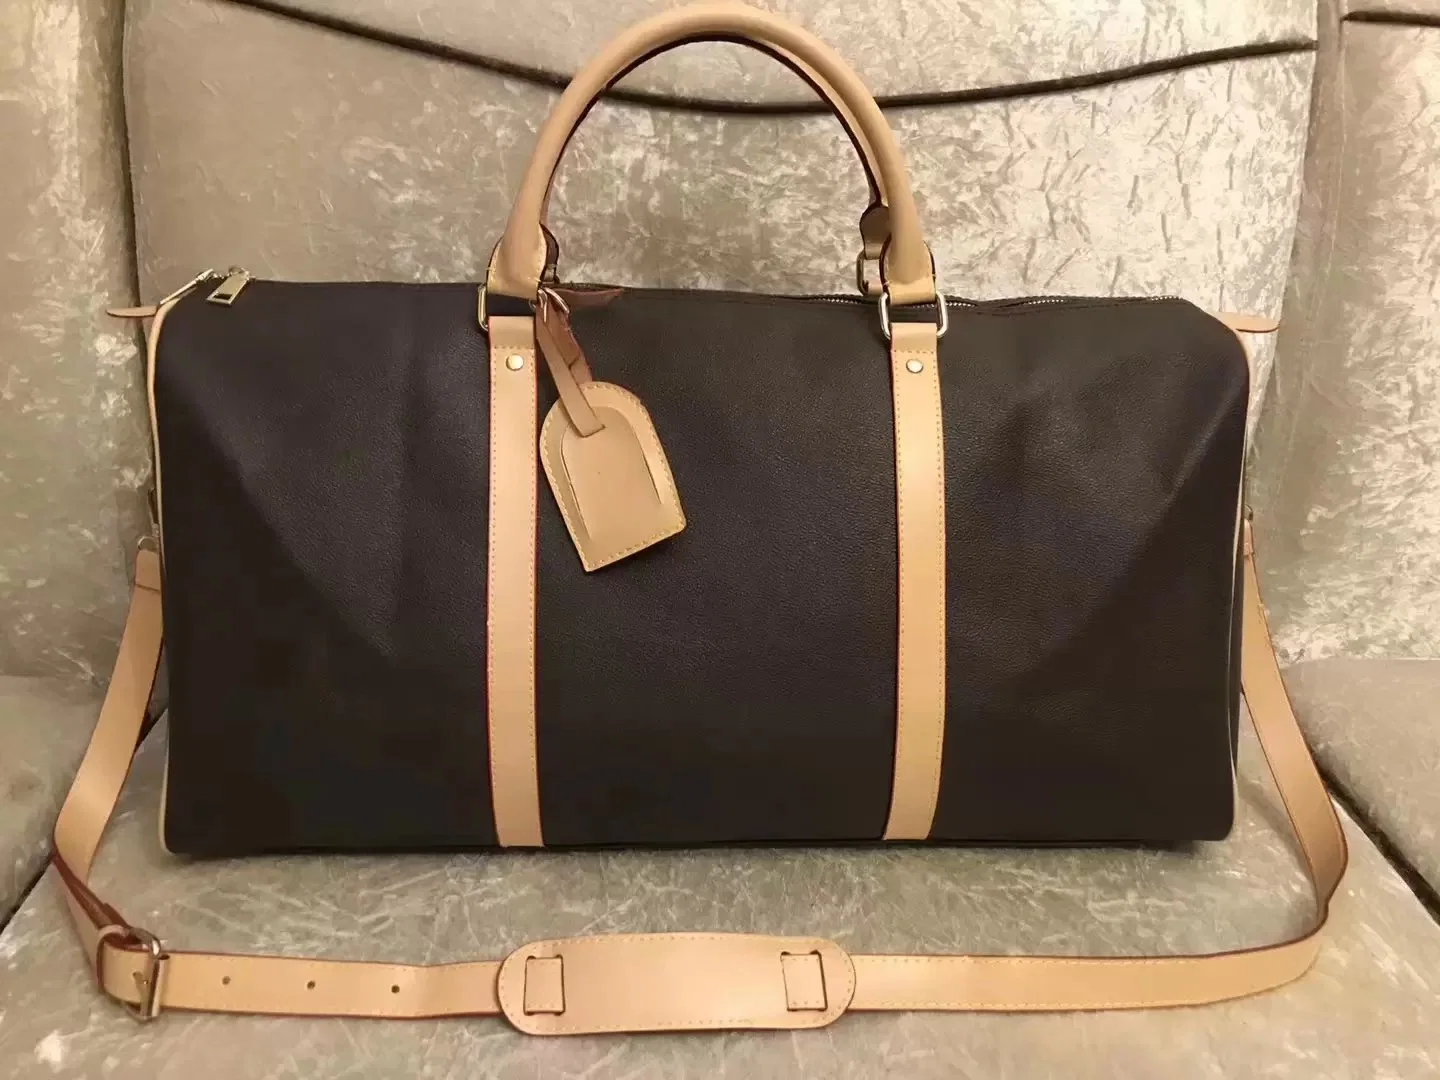 M41414/M41418 54cm Bag Keepall Luggage PU Leather Handbags Fashion Women Travel Bags Men Duffel Bag Female Large Capacity Sports Pursem41414/M41418 54cm Bag Ke